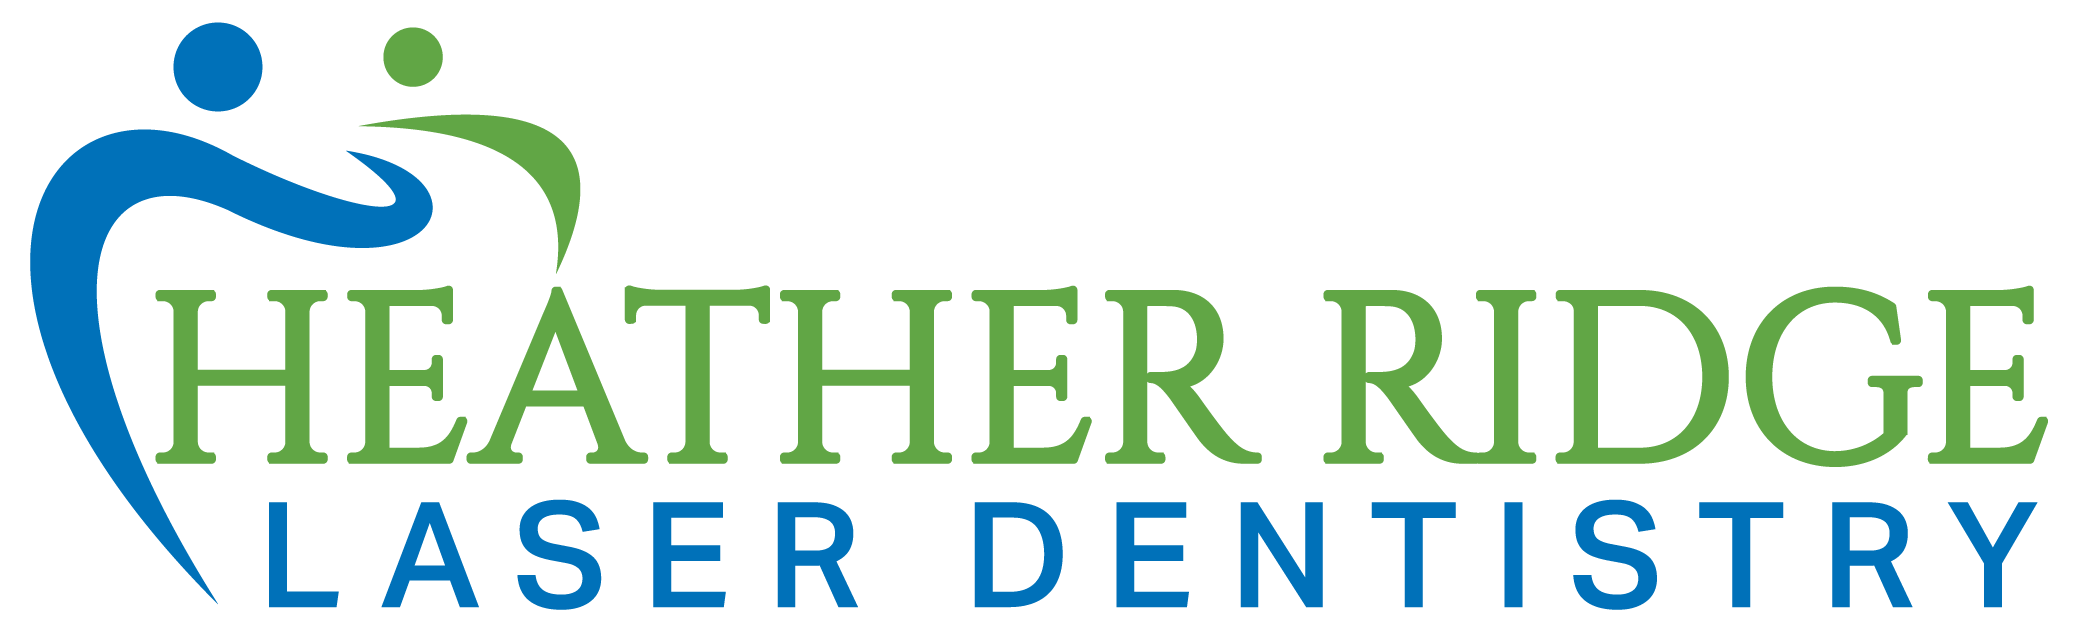 trim heather ridge laser dentistry logo with transparent background